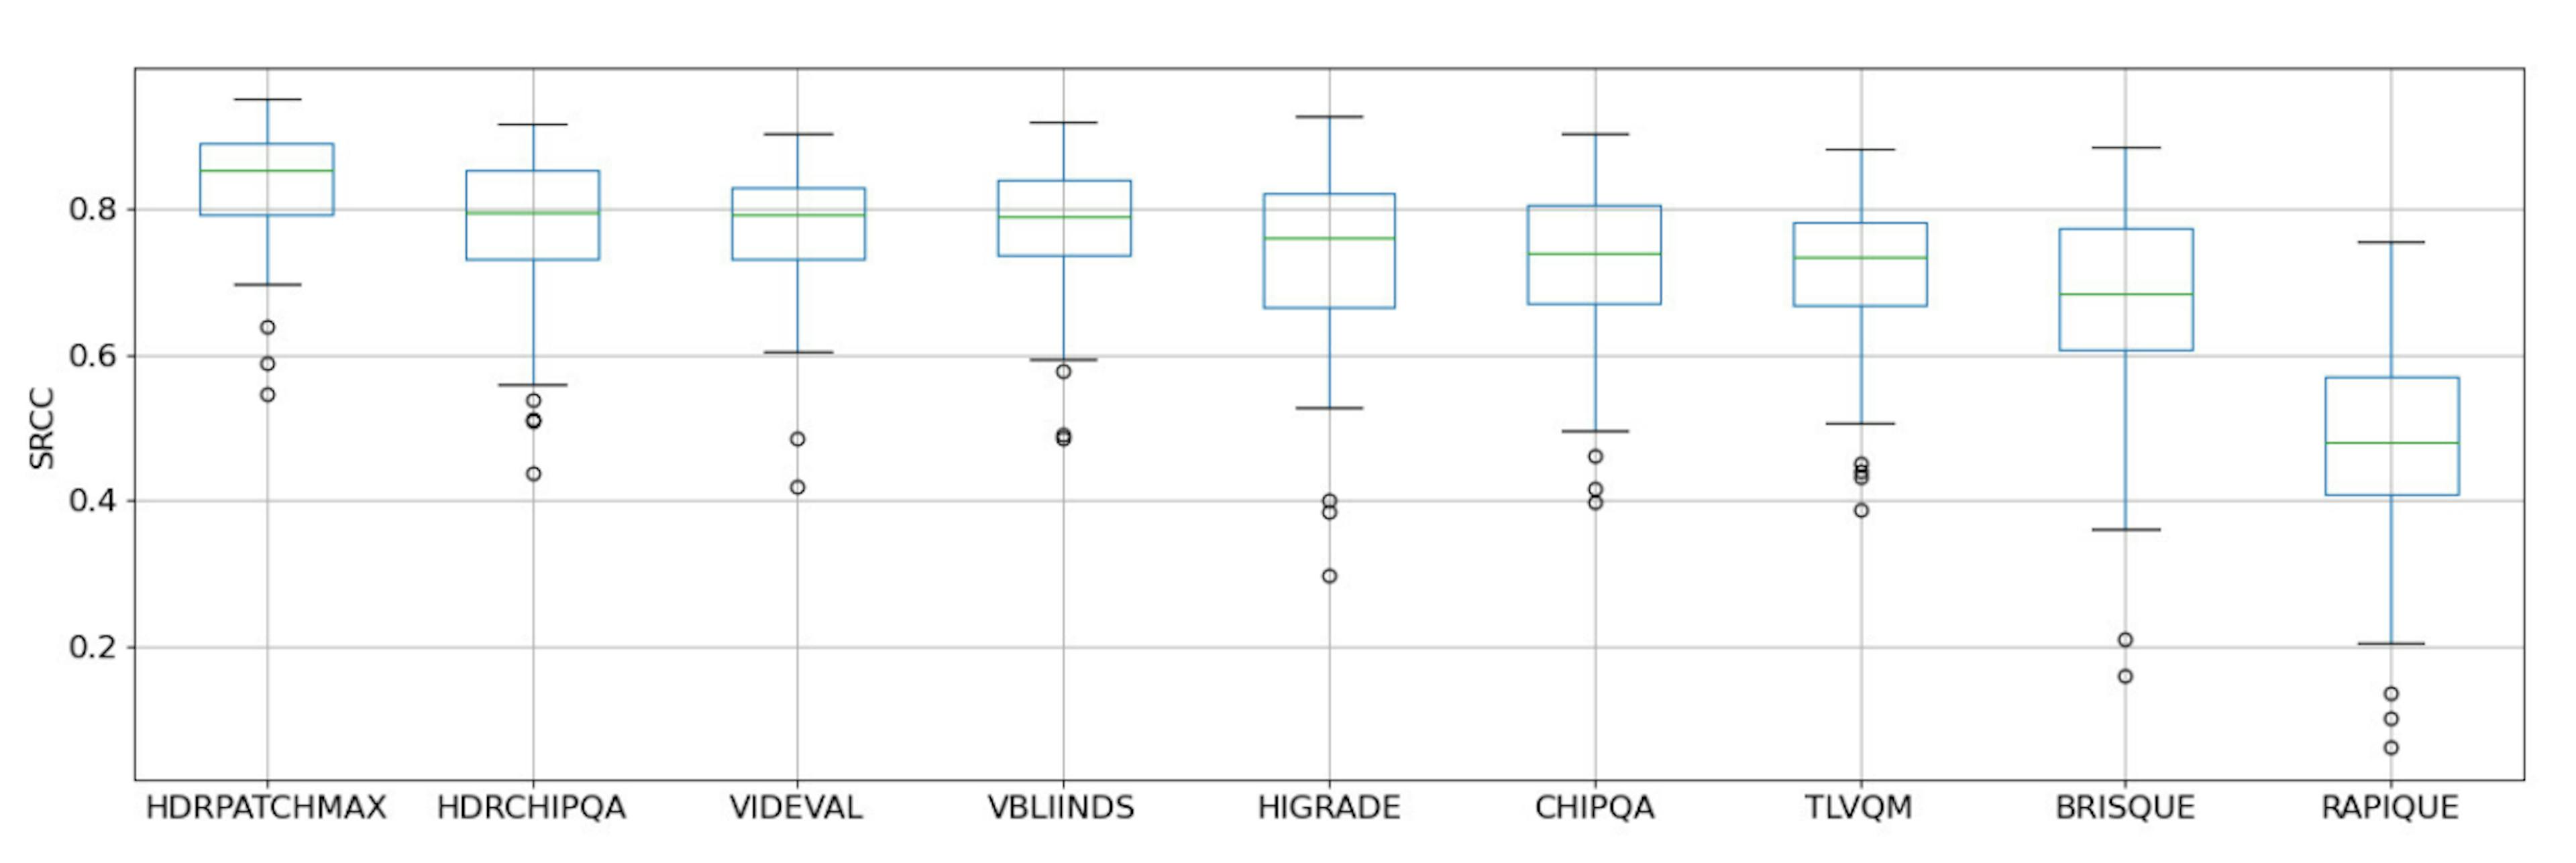 Fig. 11: Boxplot of SRCCs obtained by NR VQA algorithms for 100 train-test splits